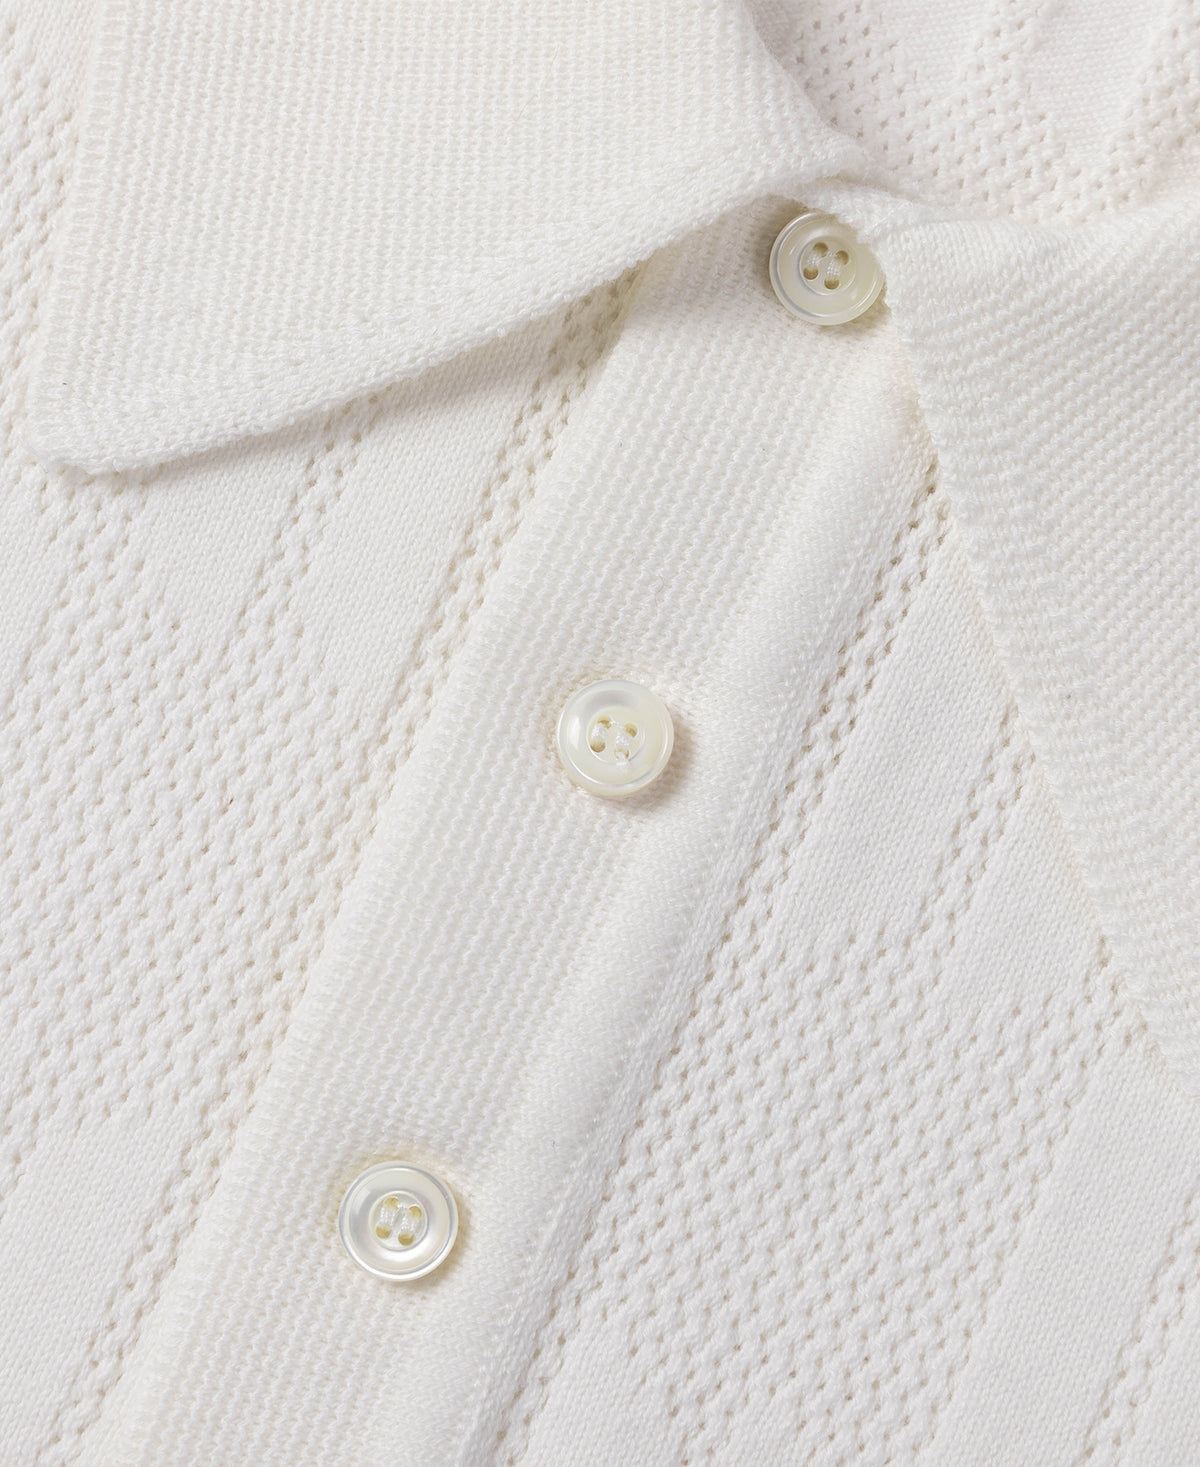 Retro Knitted Jacquard Polo Shirt - White